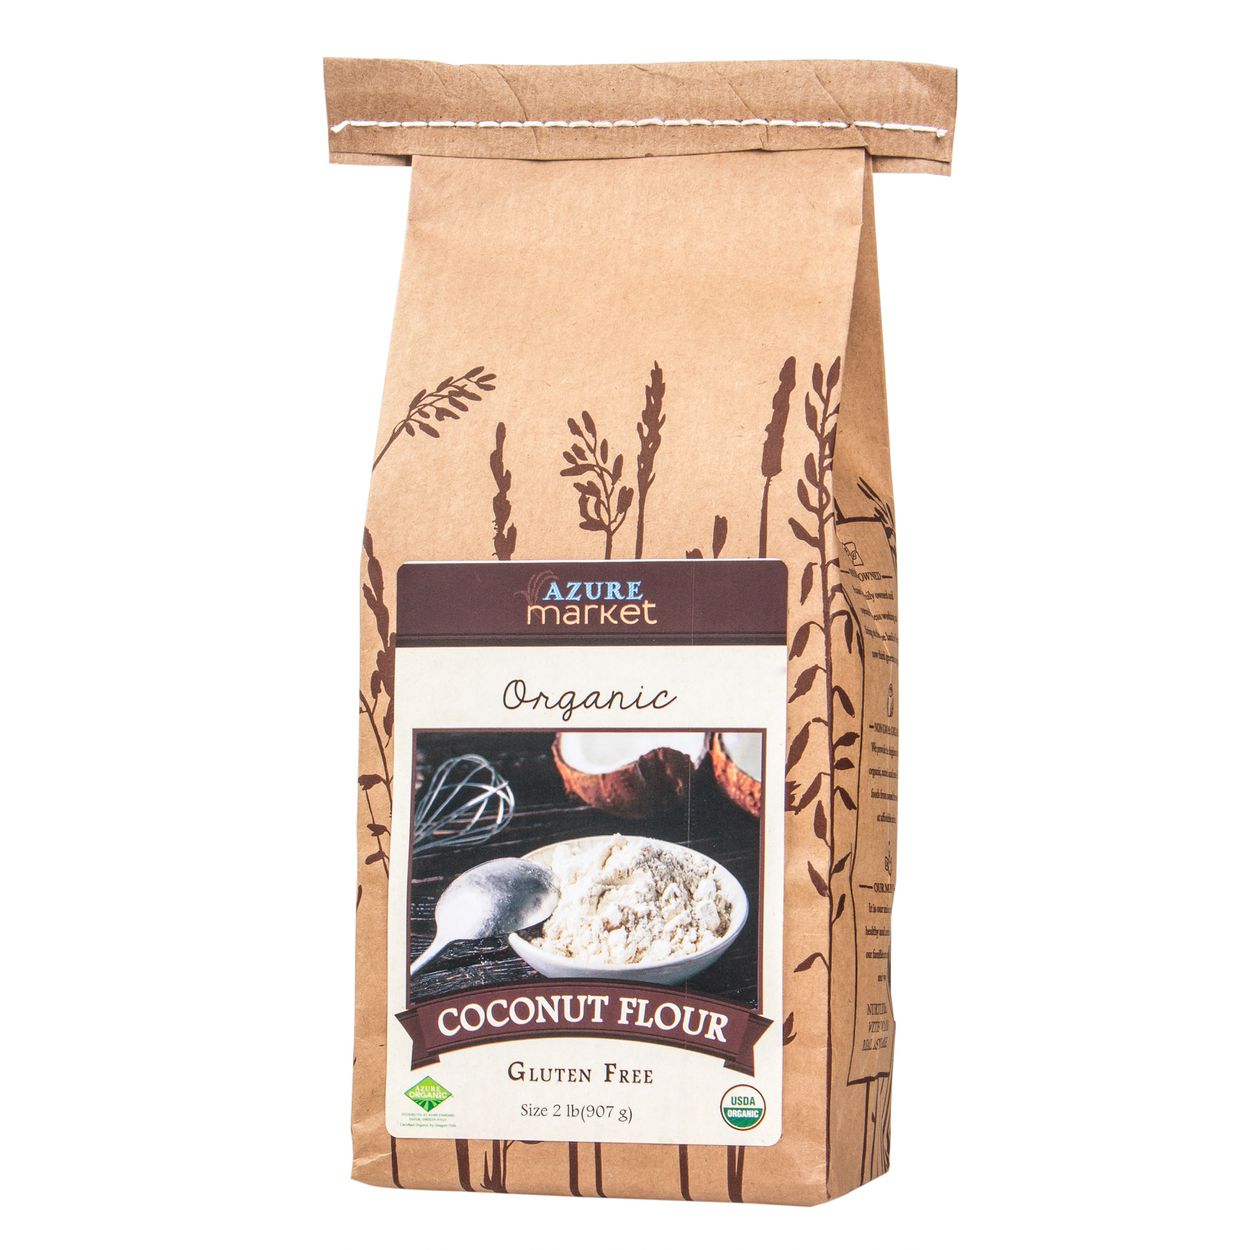 Azure Market Organics Coconut Flour